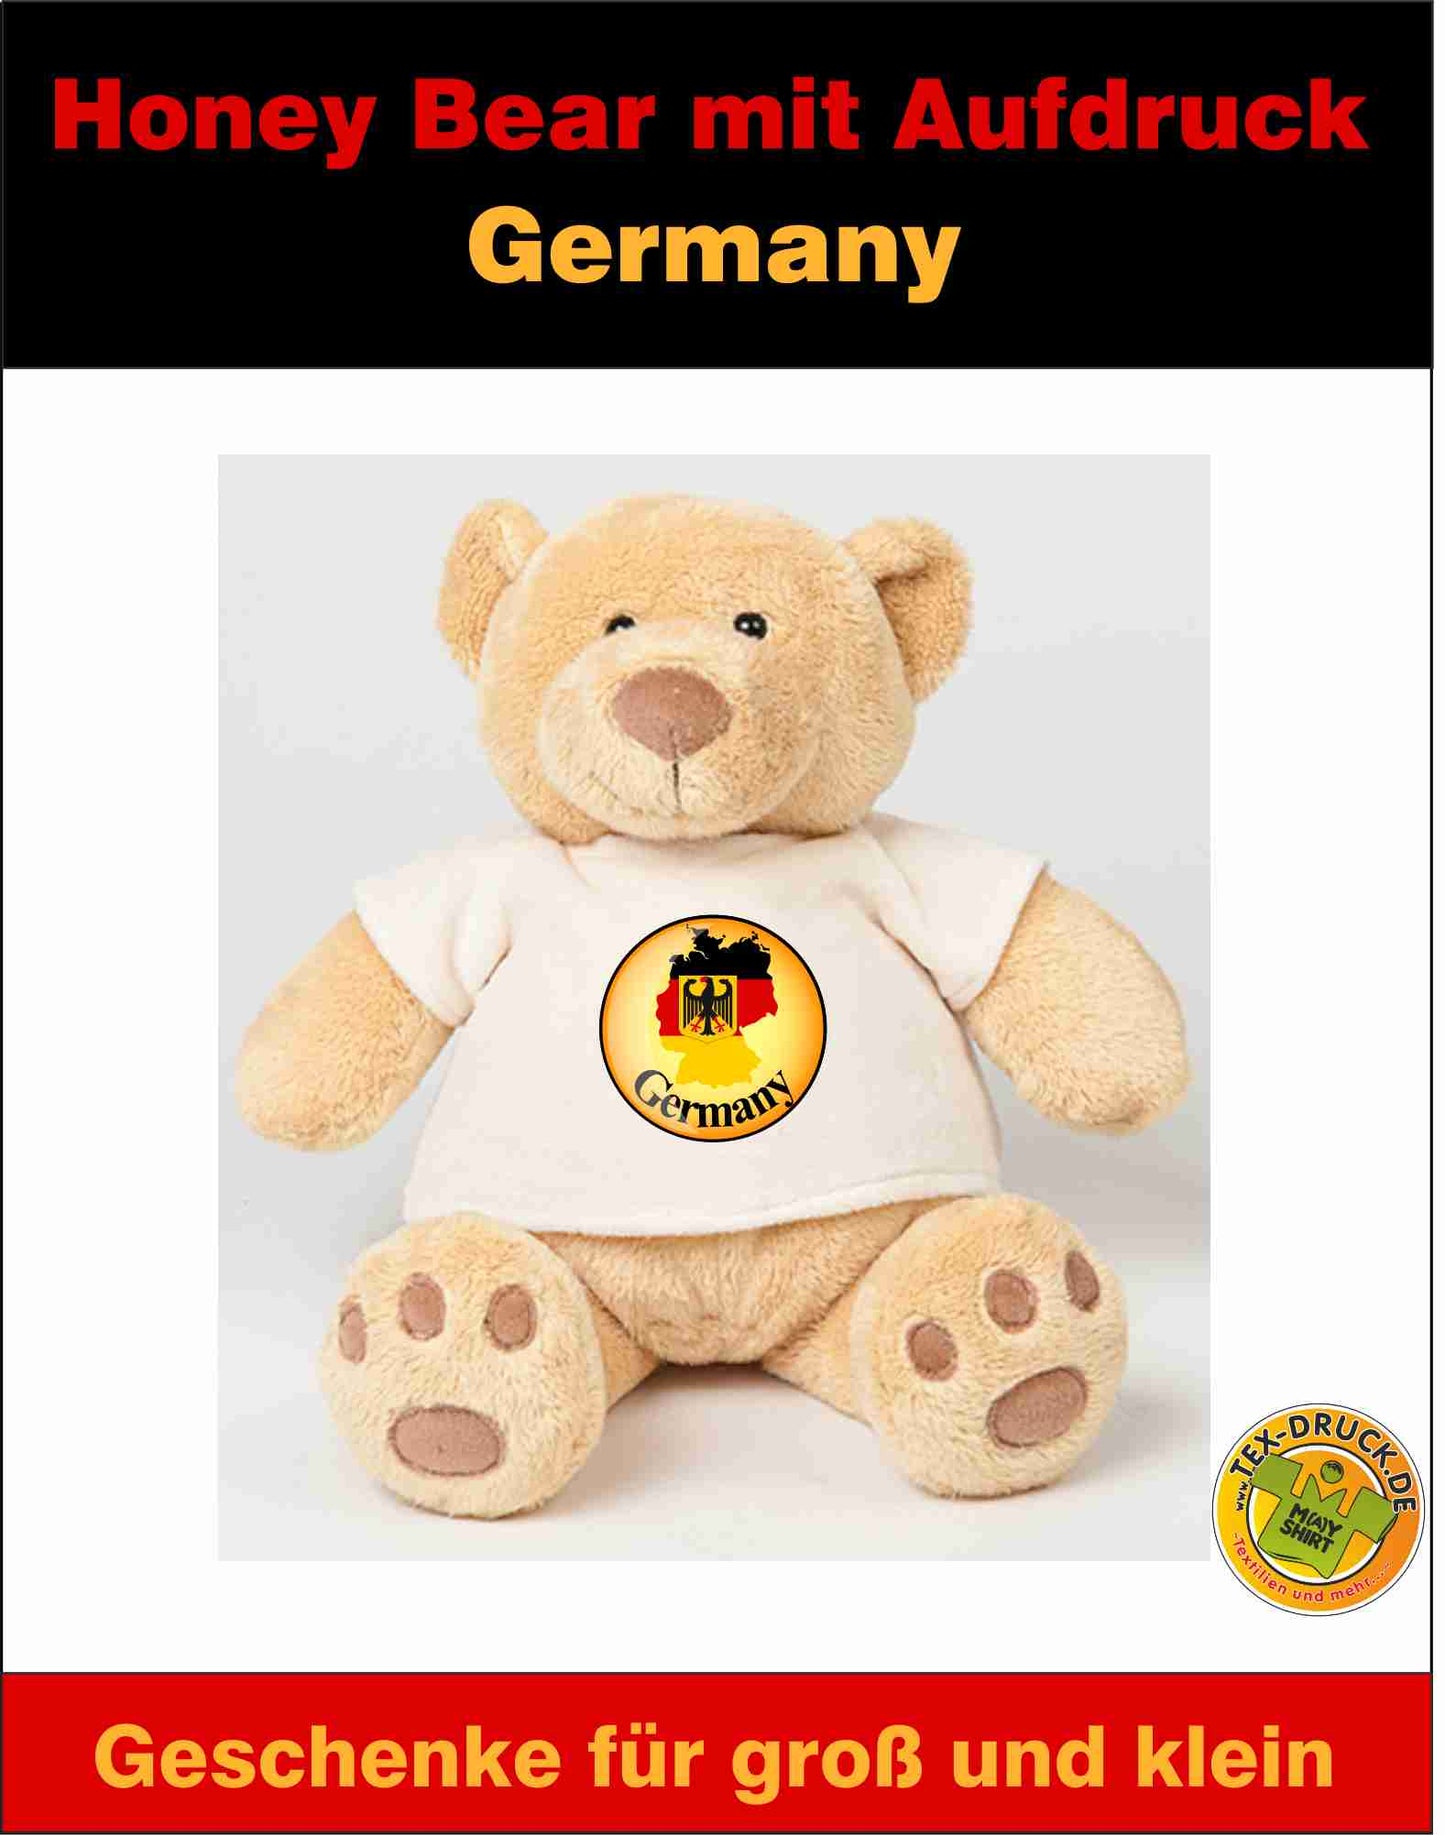 Bär - Bear mit Aufdruck "Germany"